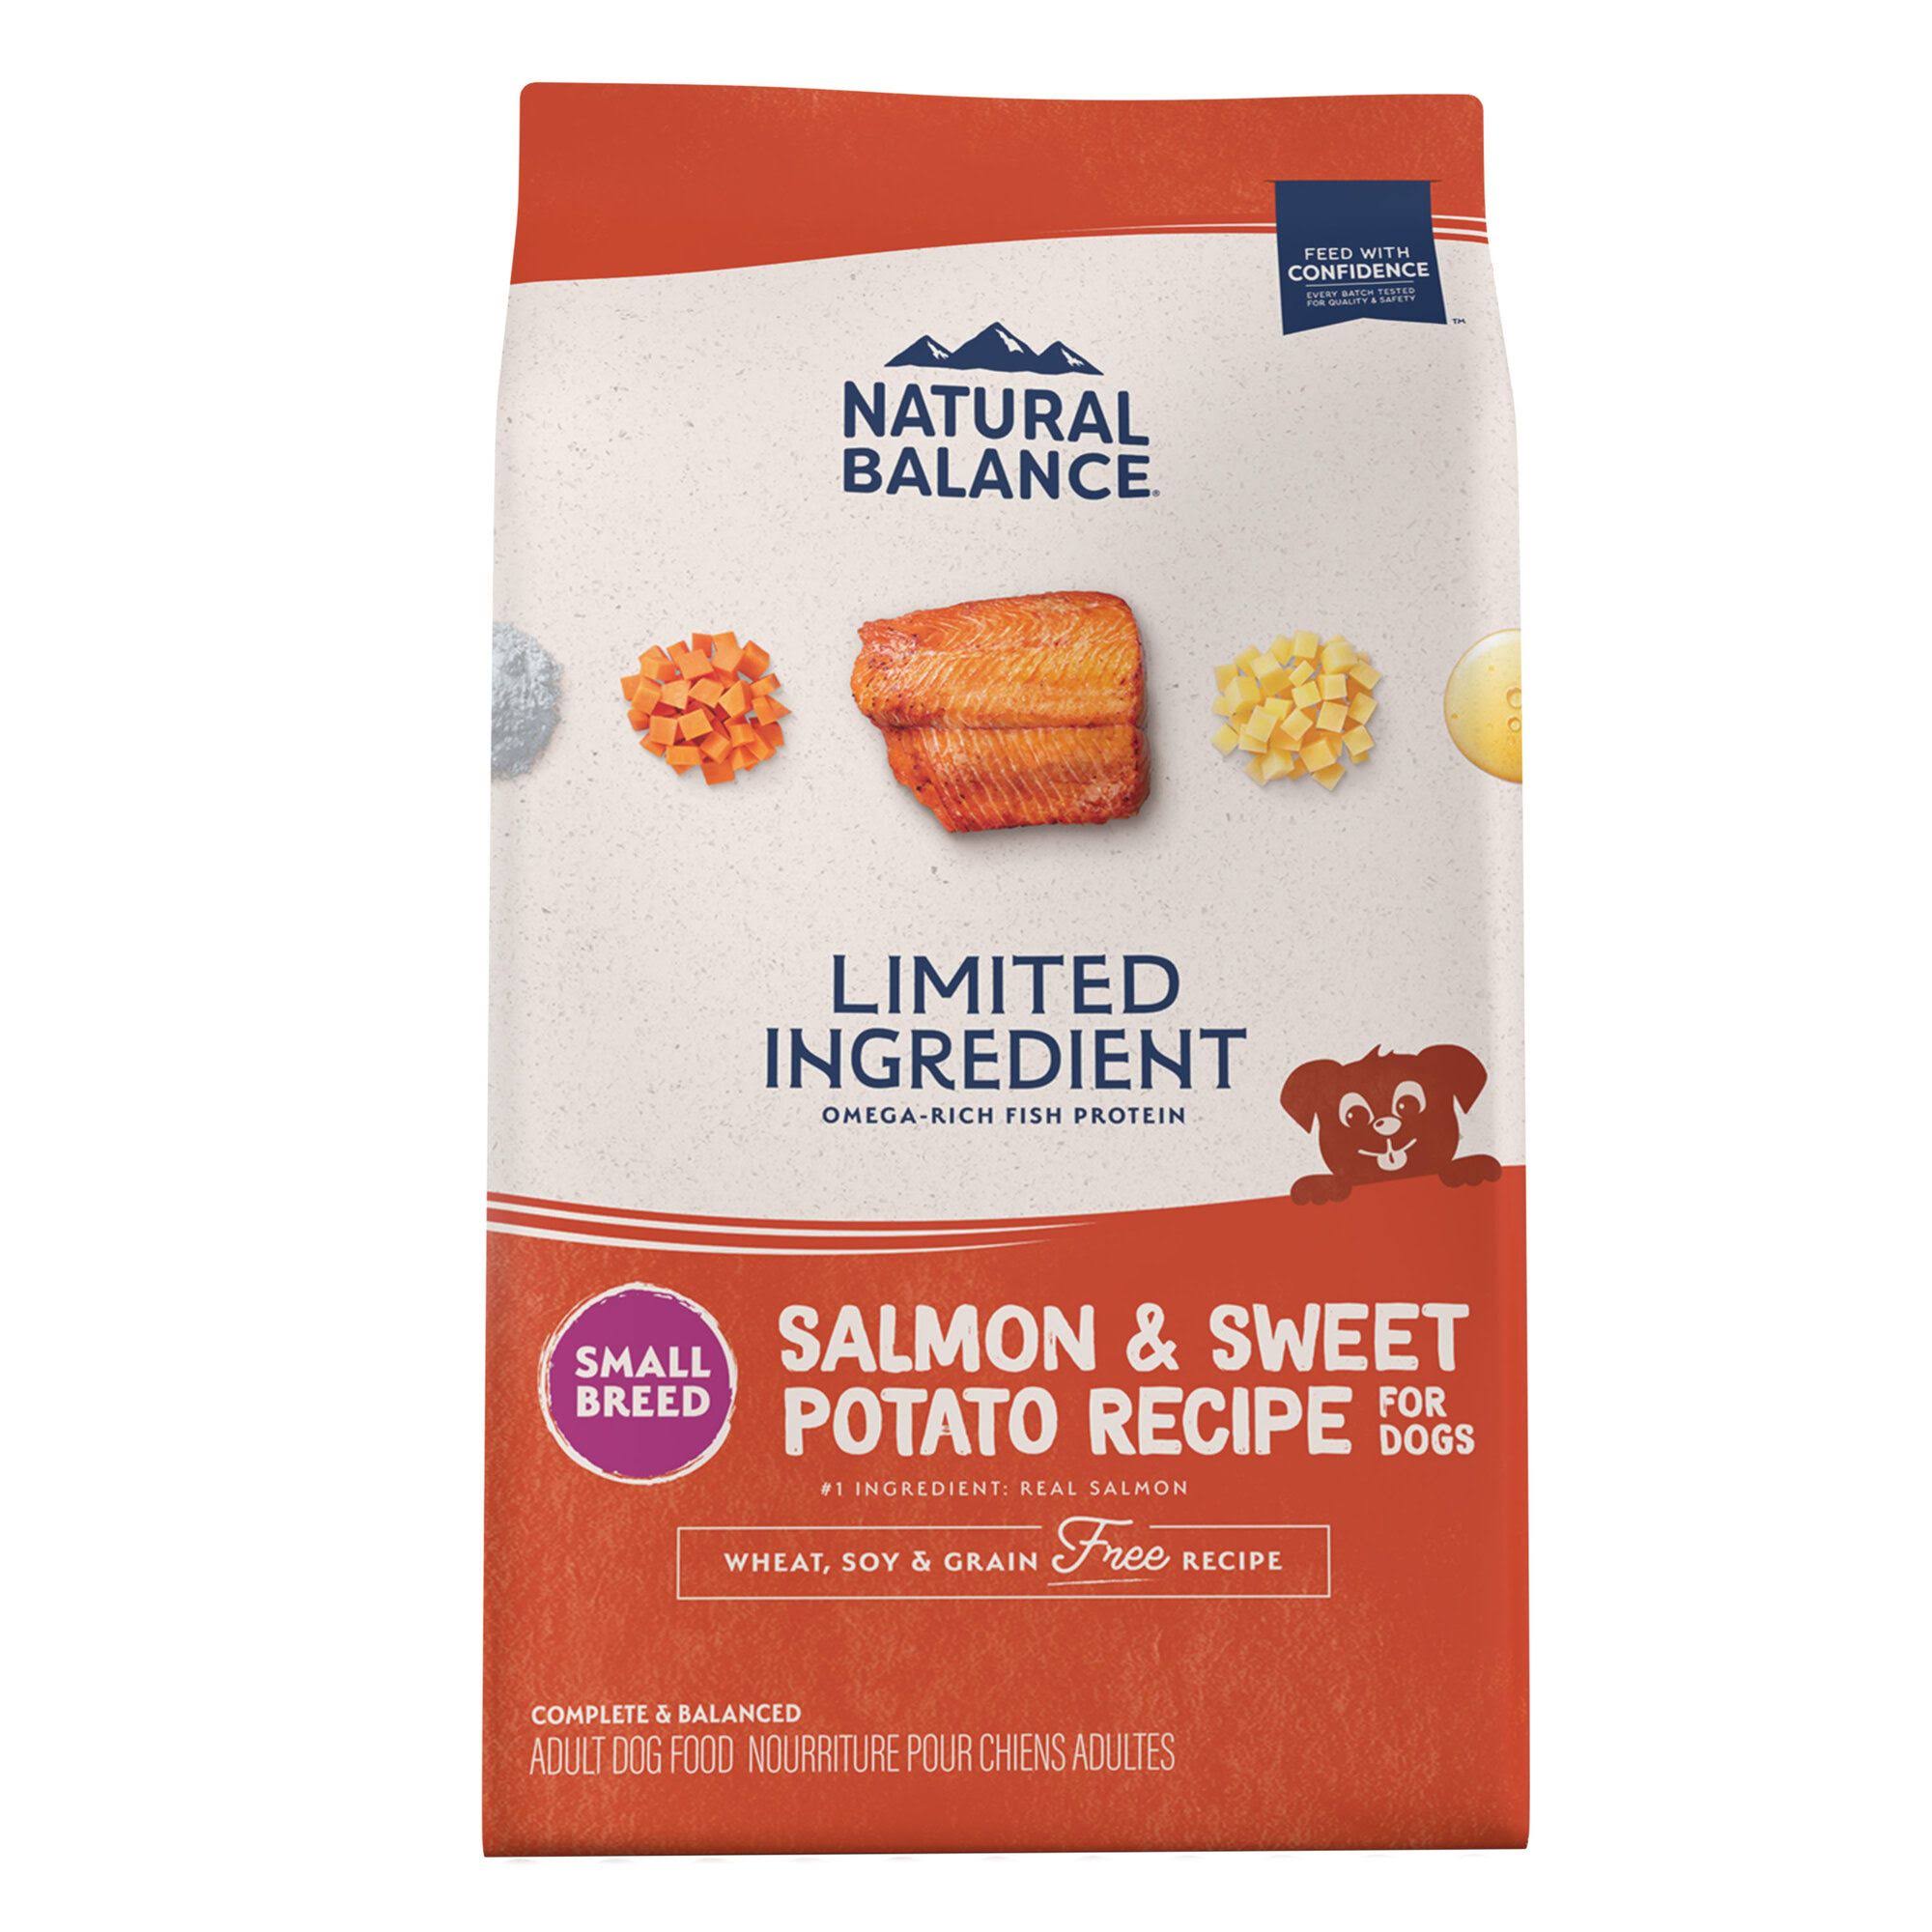 Natural Balance L.I.D. Limited Ingredient Diets Grain Free Salmon & Sweet Potato Formula Small Breed Bites Adult Dry Dog Food